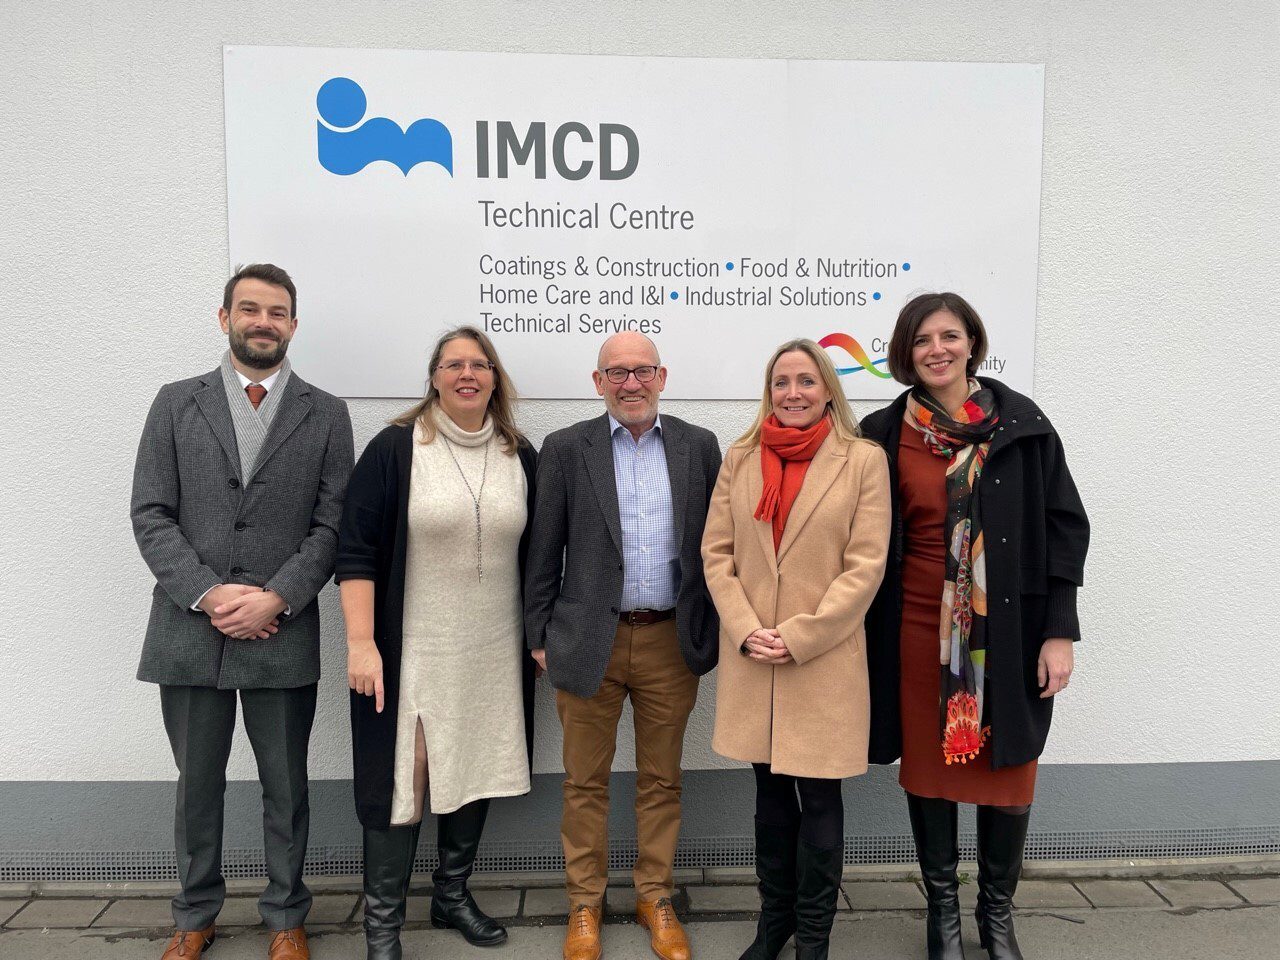 IMCD Group appointed as a distribution partner across EMEA